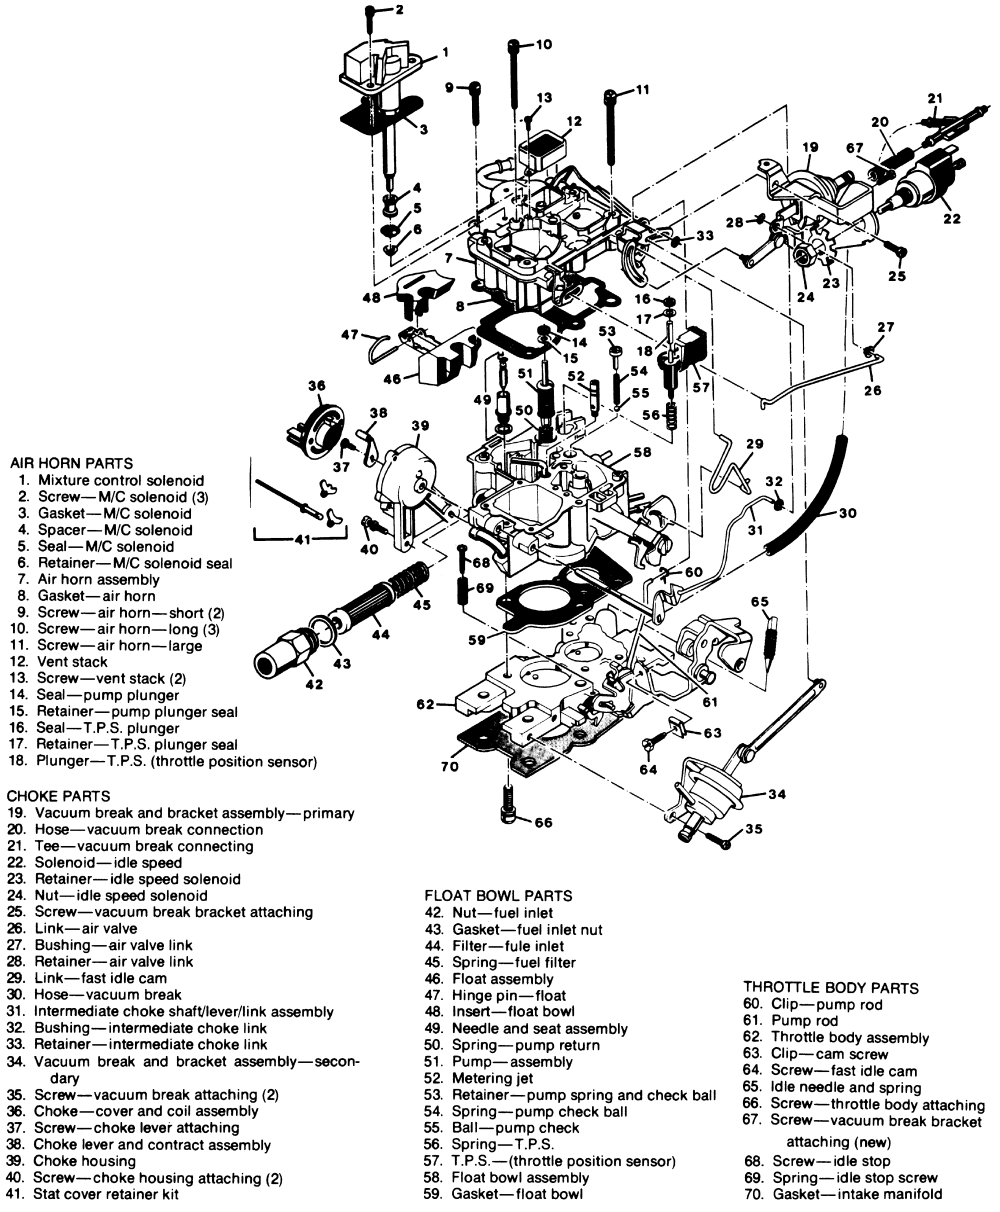 1983 Chevy S10  Diagram  2 8 Carburetor With Part Names